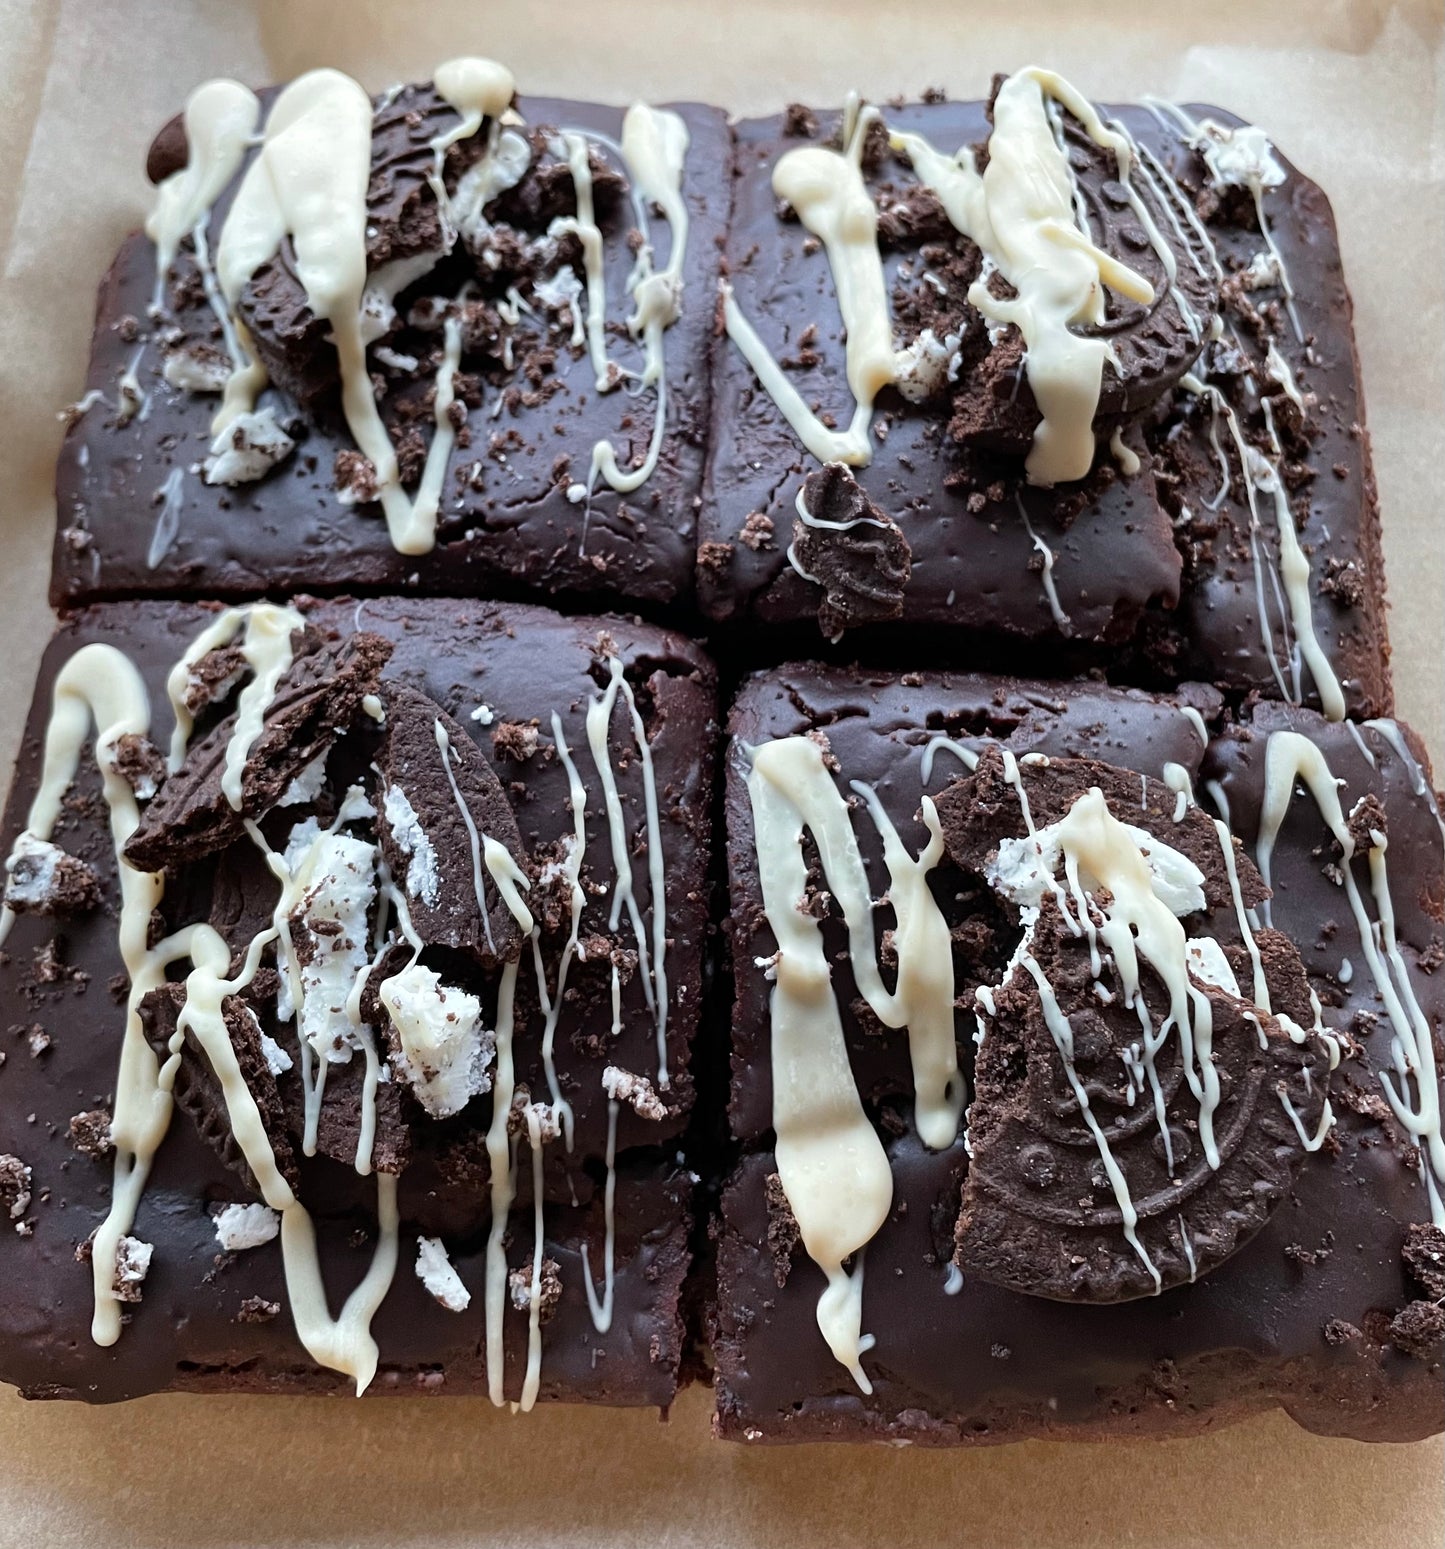 Chocolate Oreo Brownies